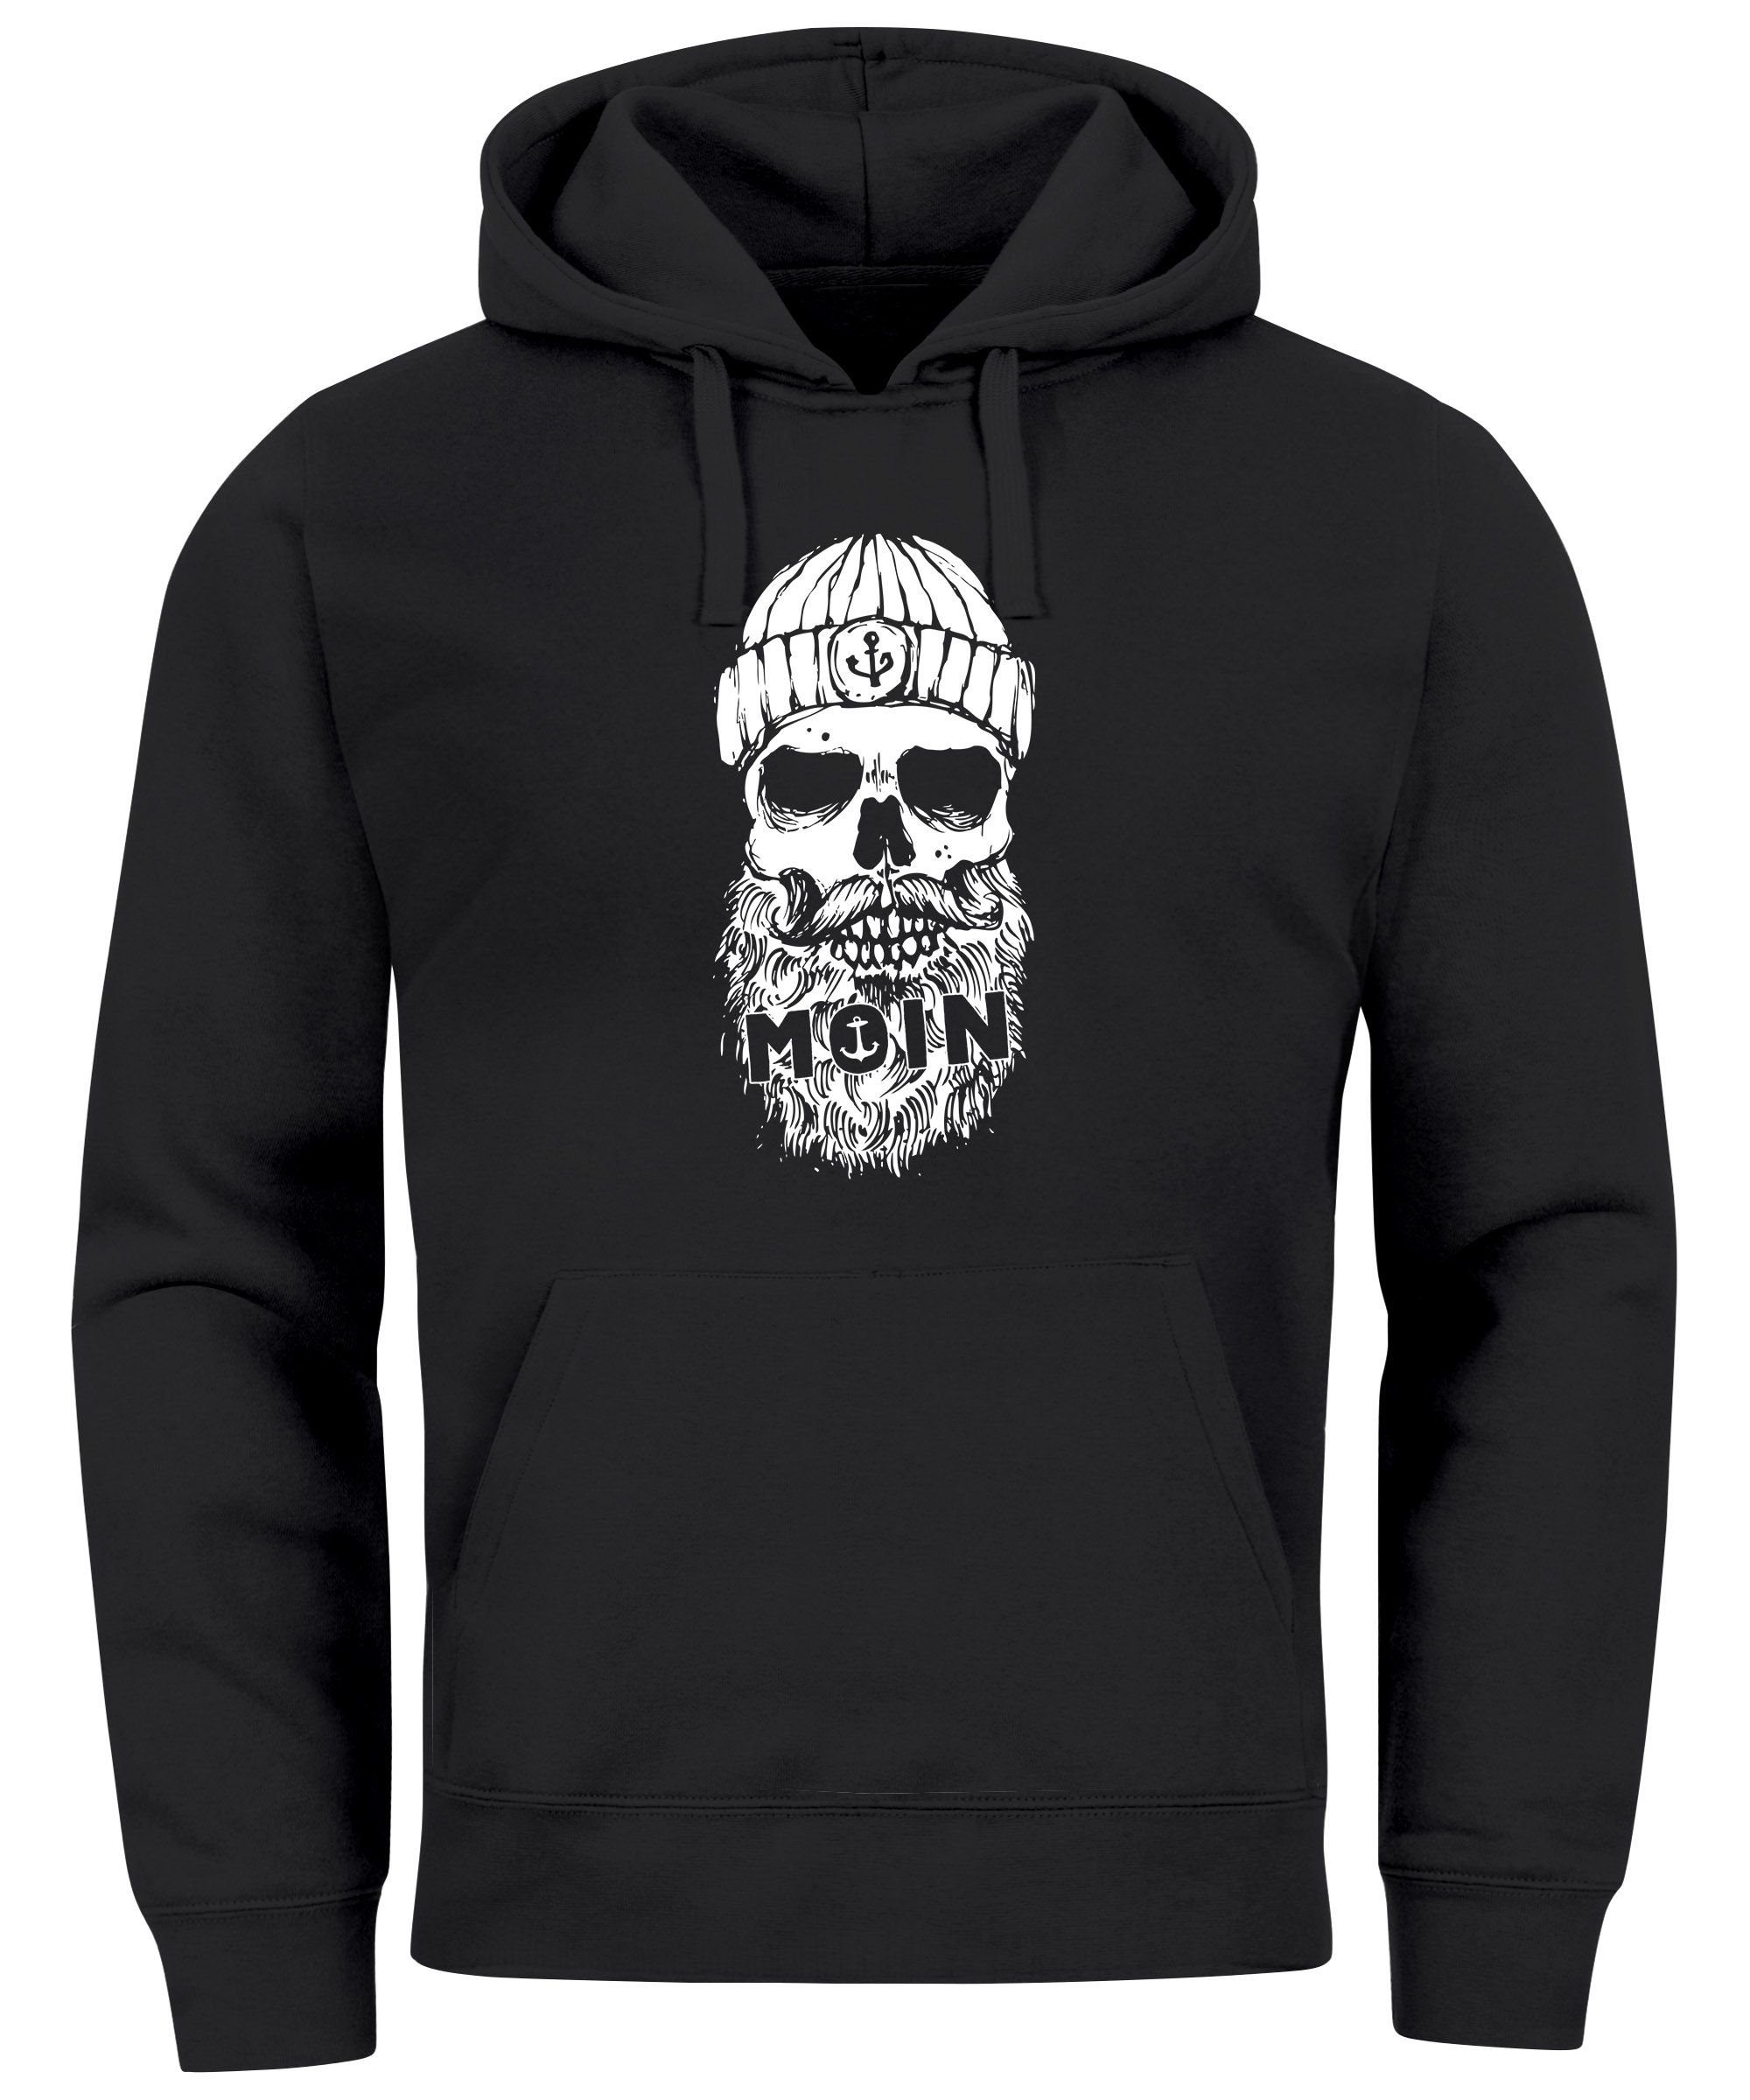 Schädel Totenkopf Skull Streetwear Kapuzen pulli Sweatshirt Hoodie Pullover Neu 